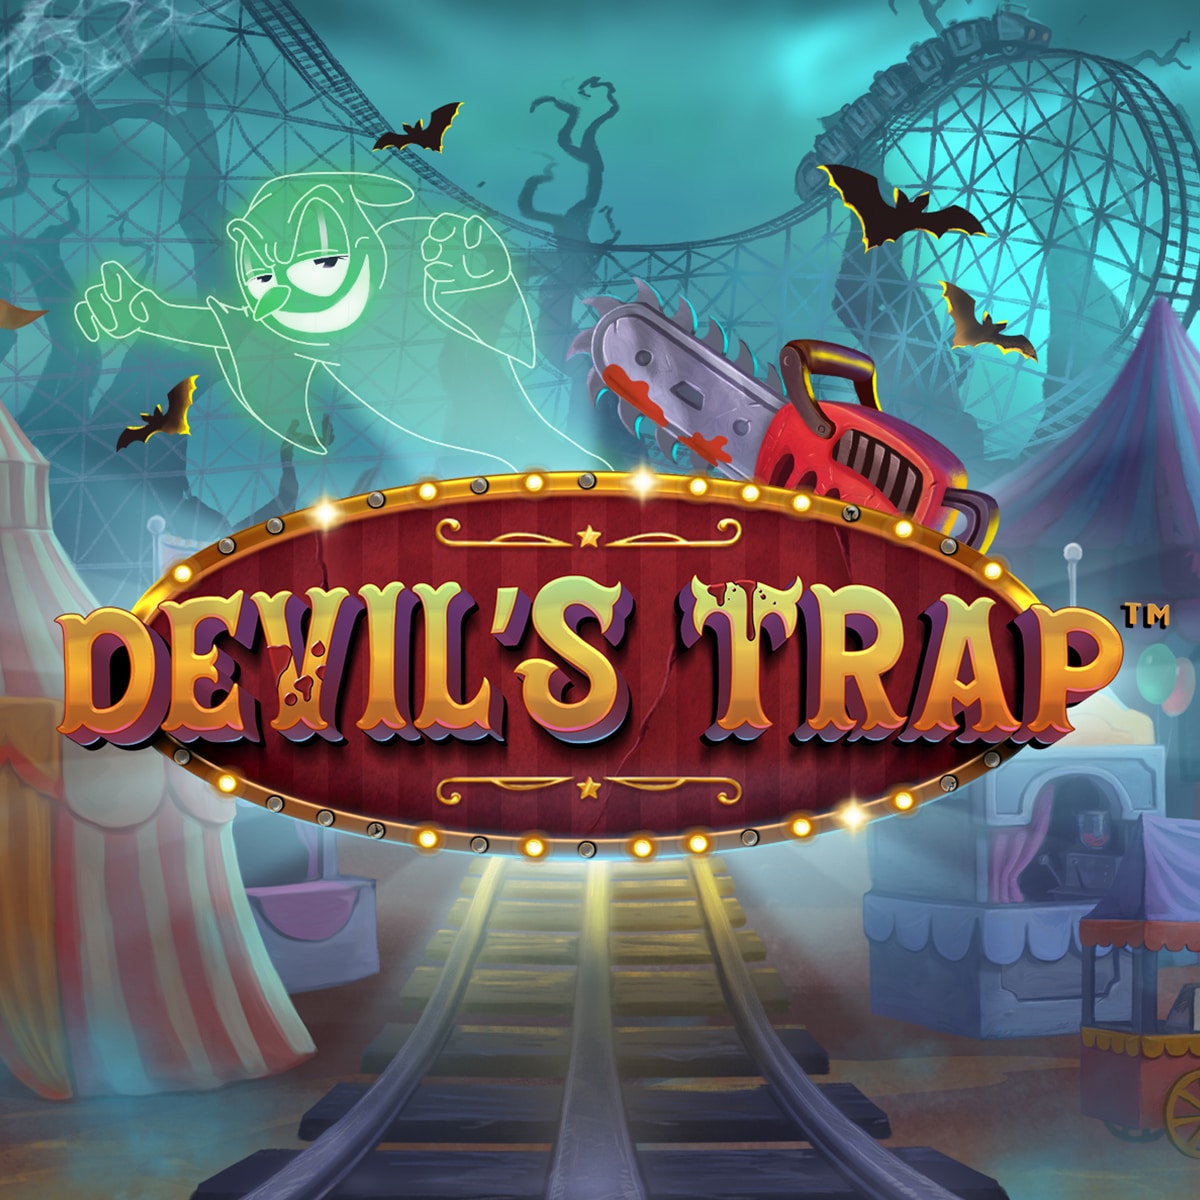 Devil’s Trap Slot